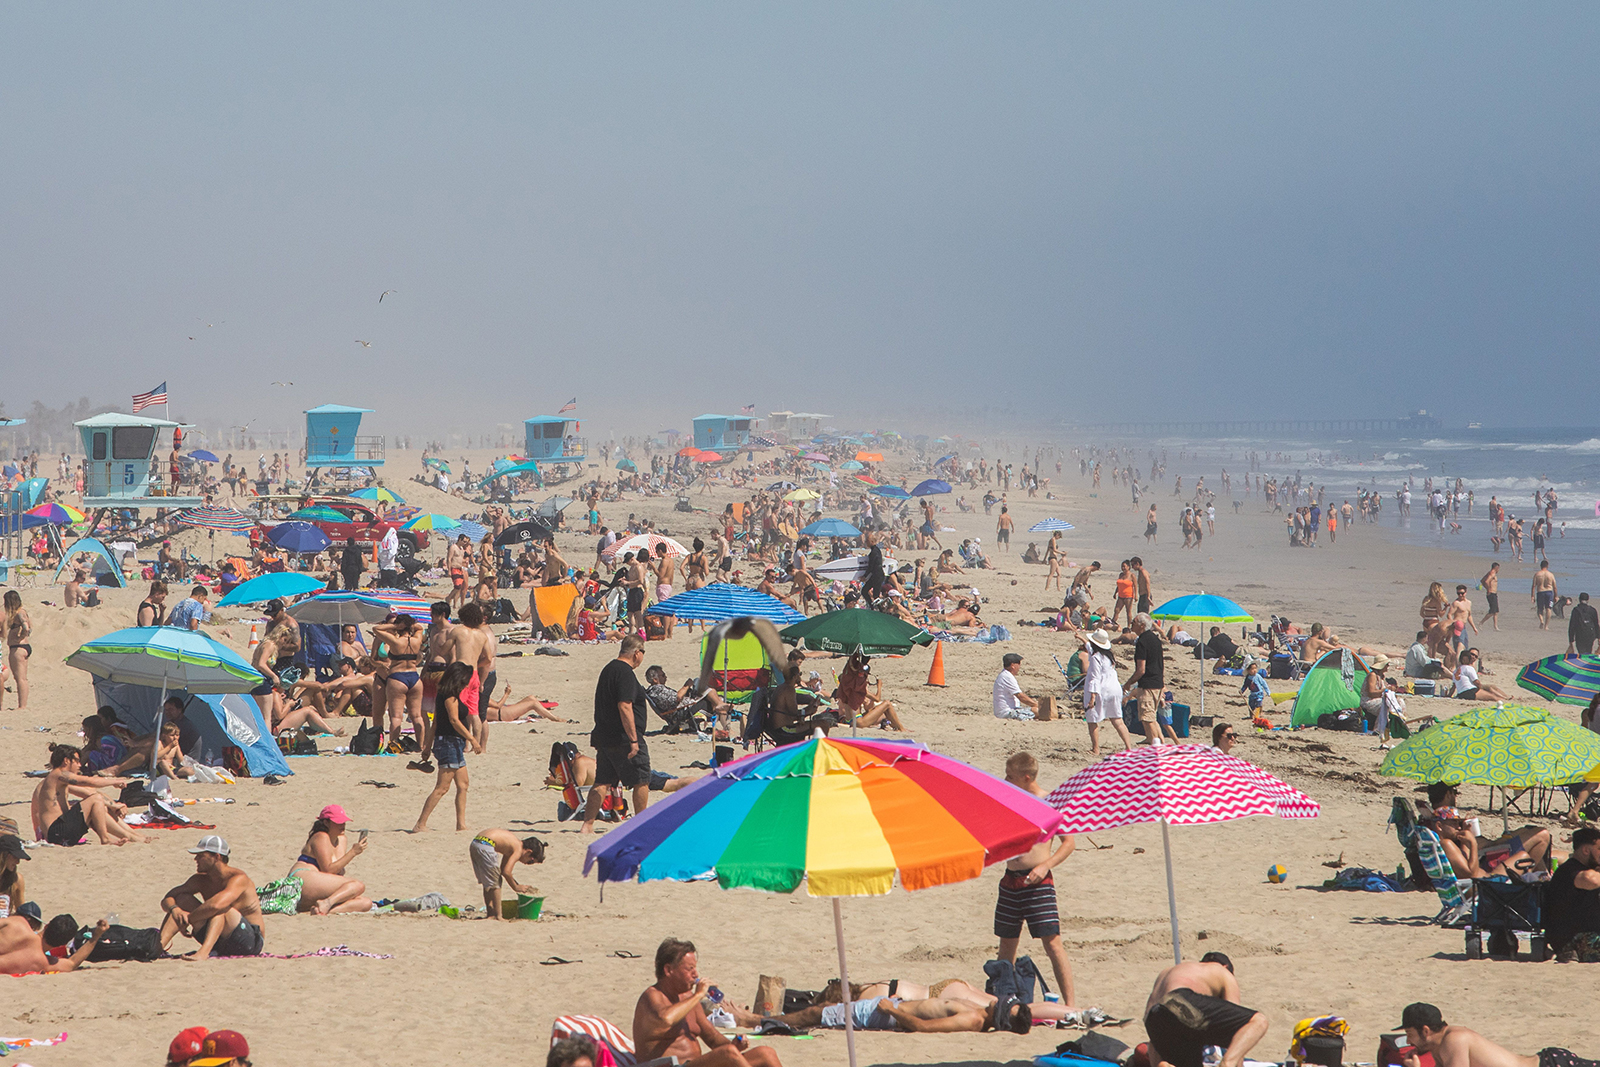 People enjoy the beach amid the novel coronavirus pandemic in Huntington Beach, California on April 25.